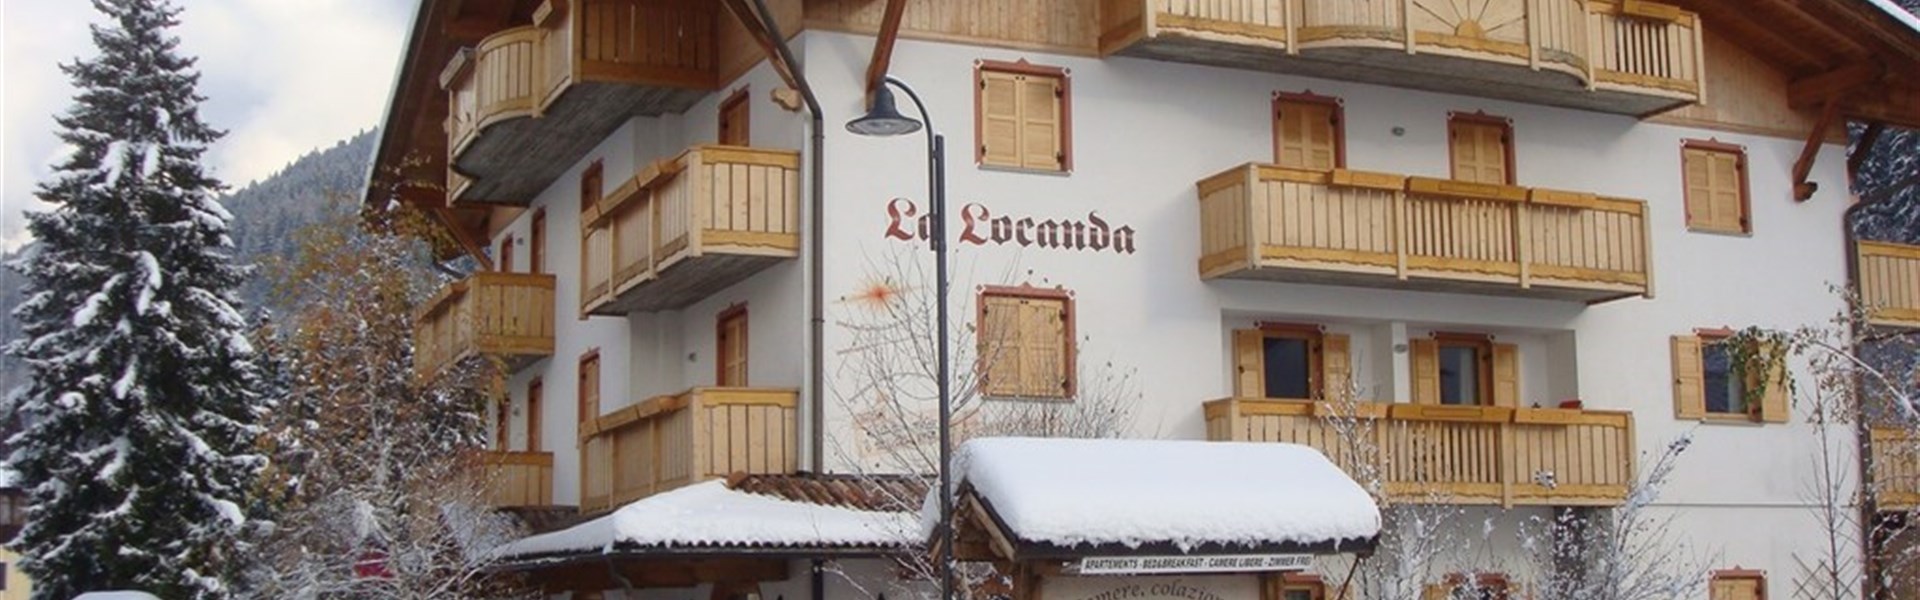 Residence La Locanda - 